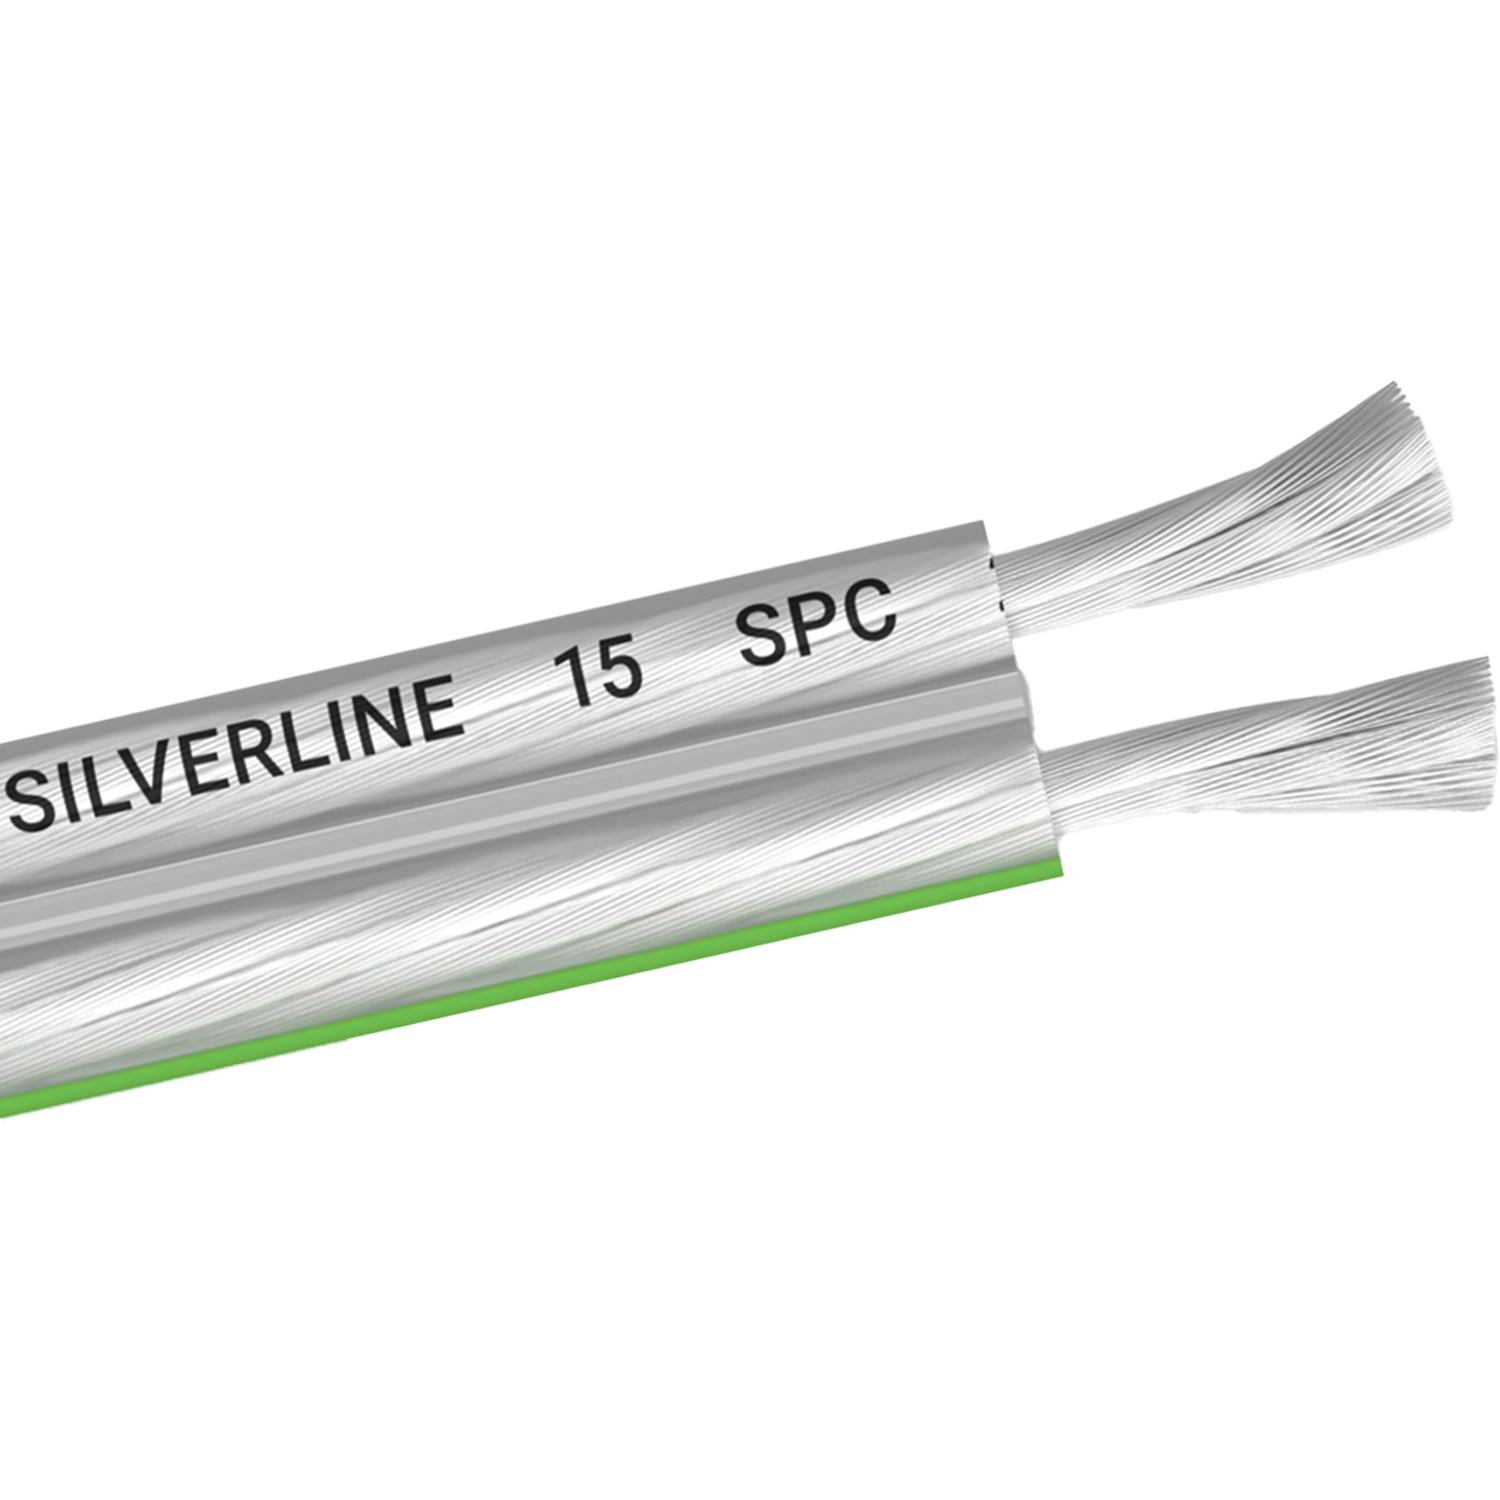 Silverline SP-15